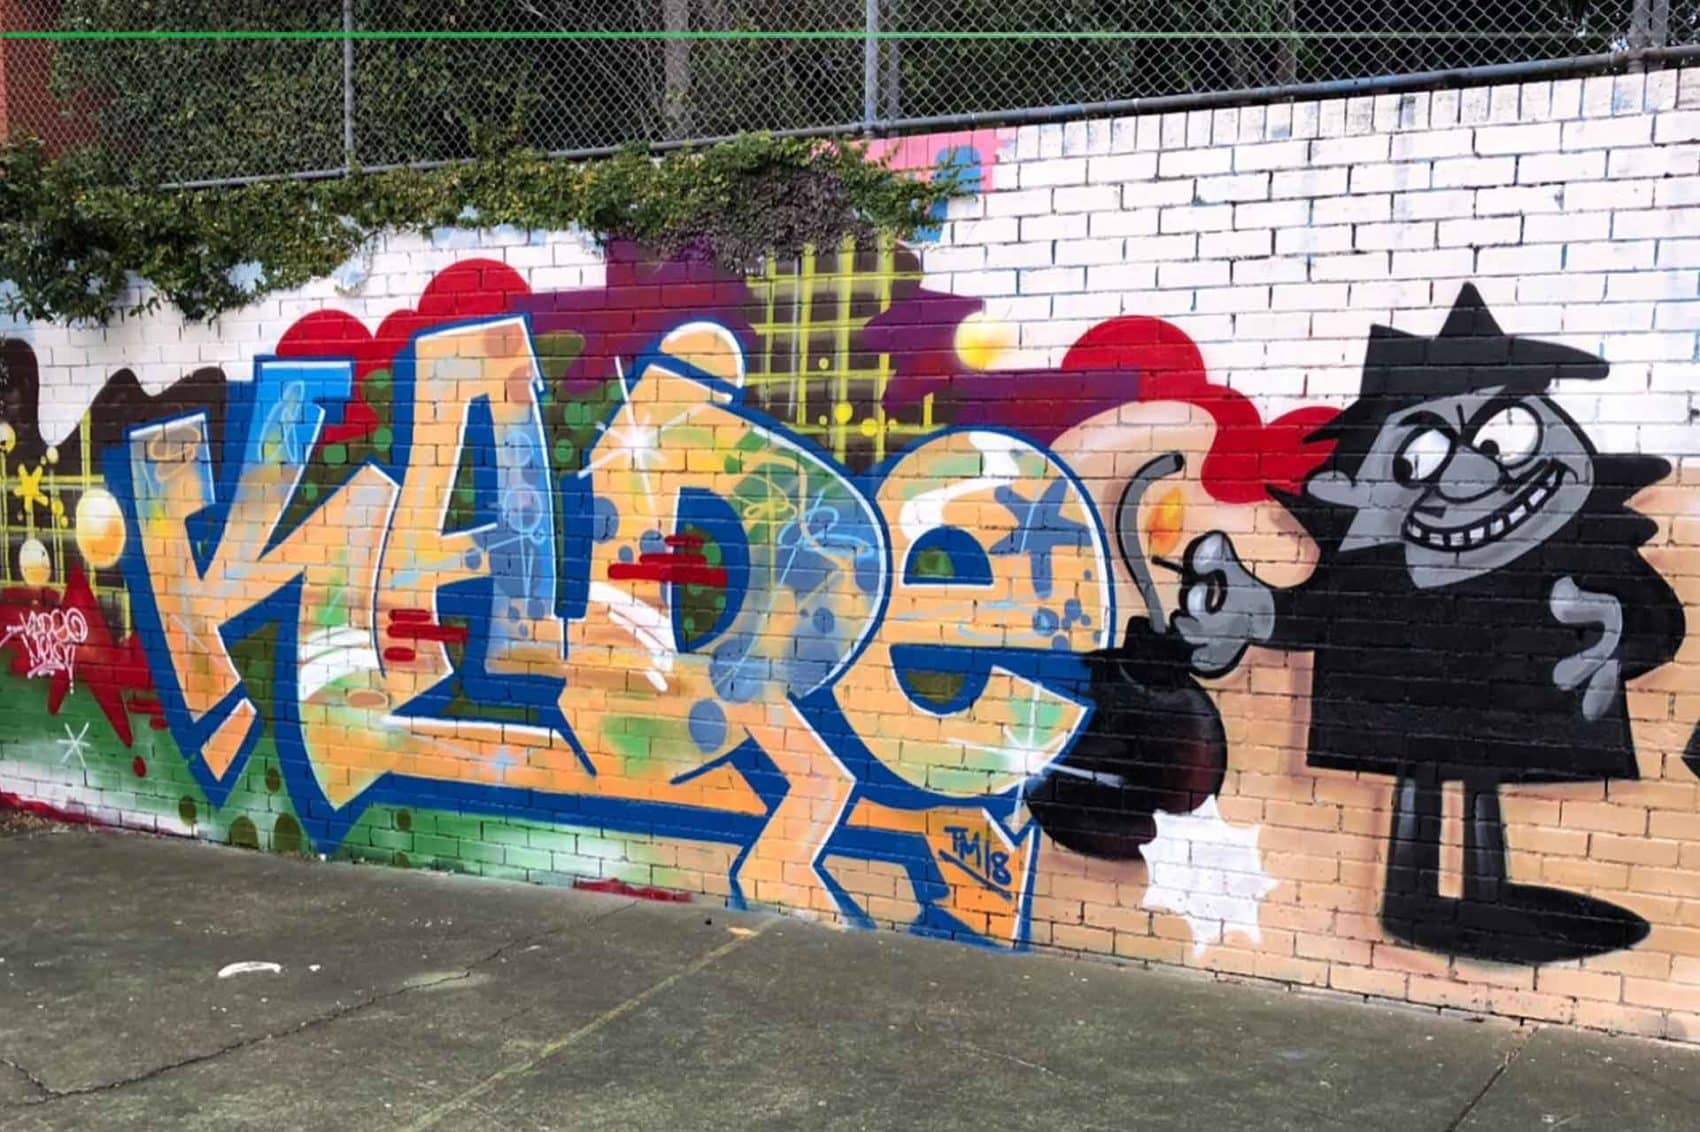 Sydney graffiti art